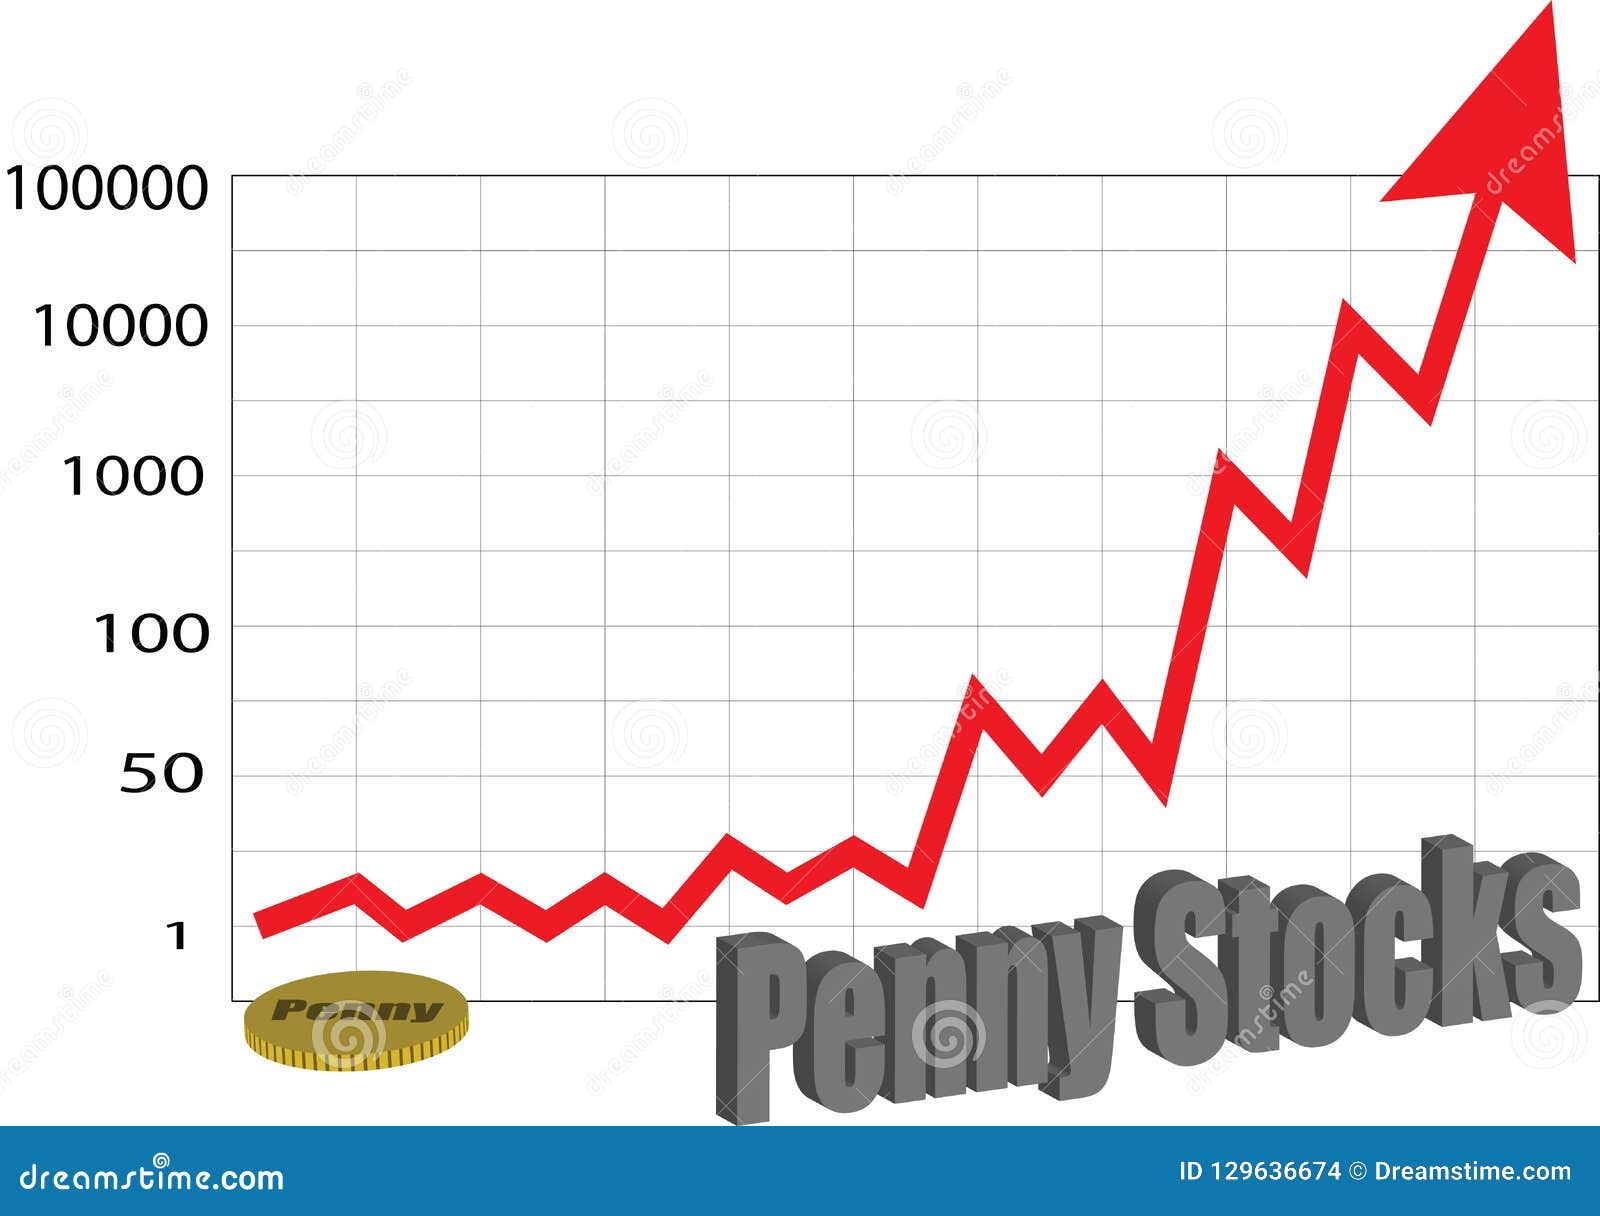 penny stocks value investing stock